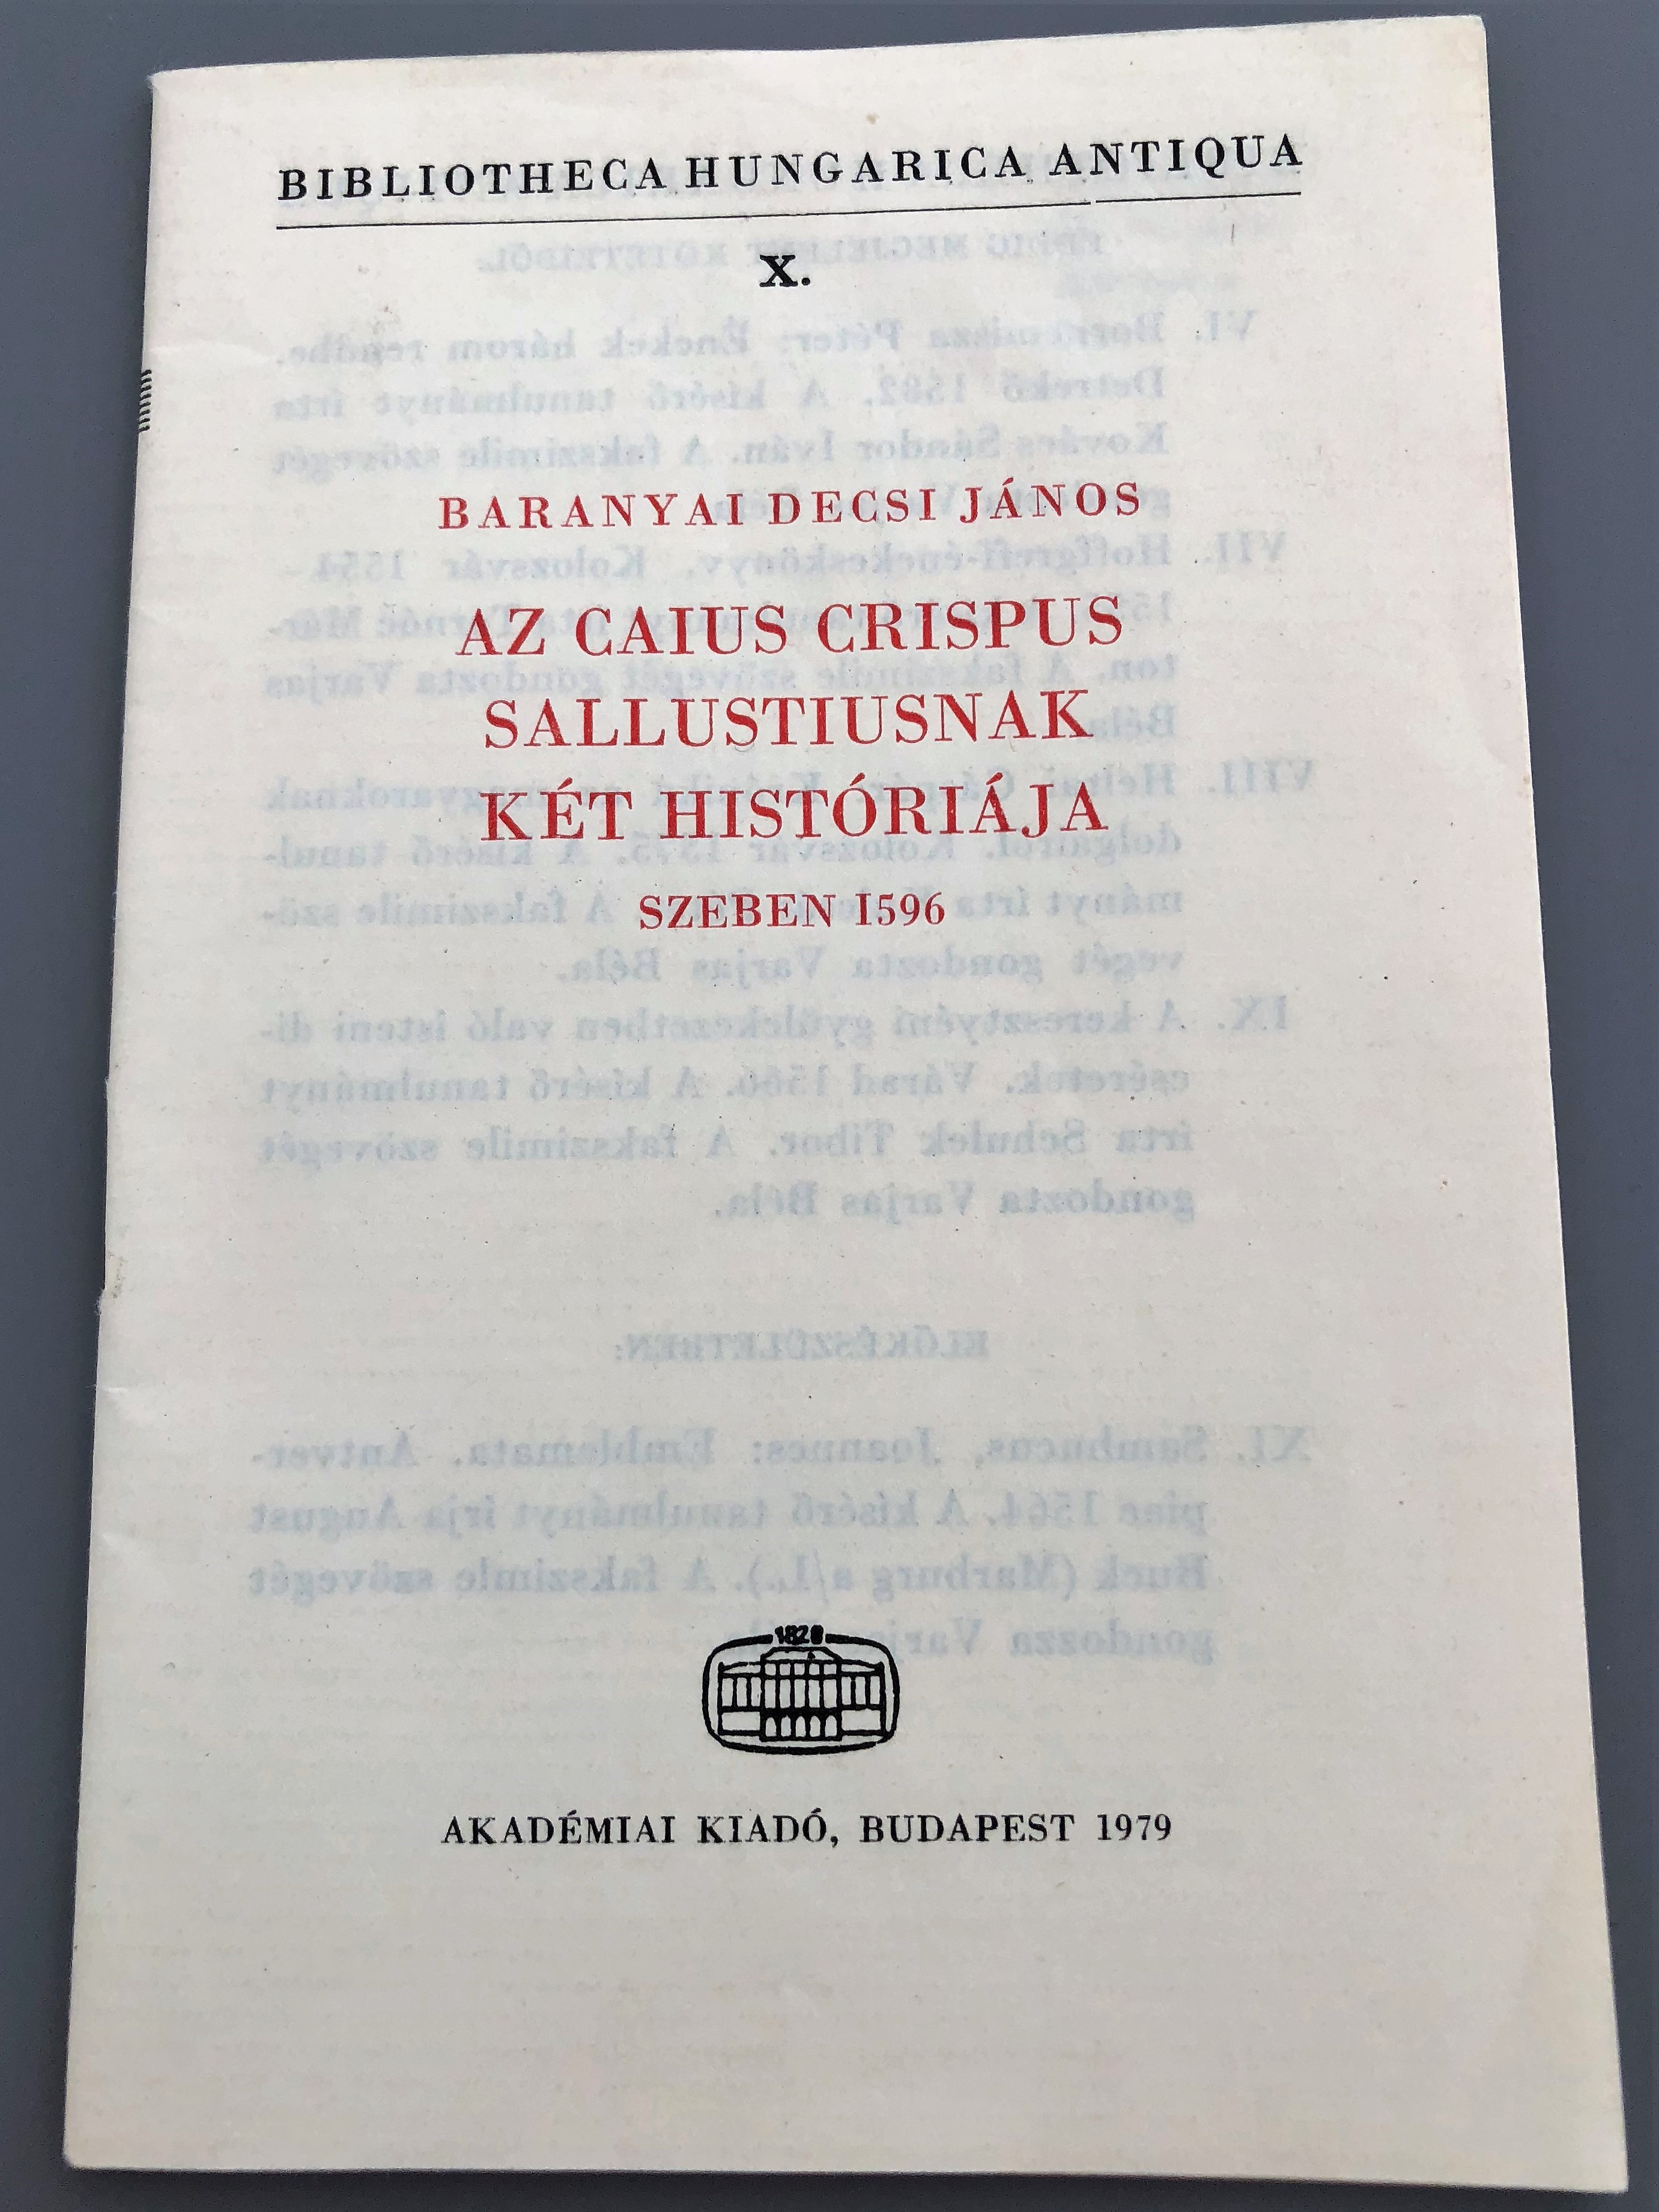 az-caius-crispus-sallustiusnak-k-t-hist-ri-ja-by-baranyai-d-csi-j-nos-szeben-1596-two-stories-from-caius-crispus-sallustius-in-hungarian-language-bibliotheca-hungarica-antiqua-x.-hardcover-akad-miai-kiad-1979-16-.jpg